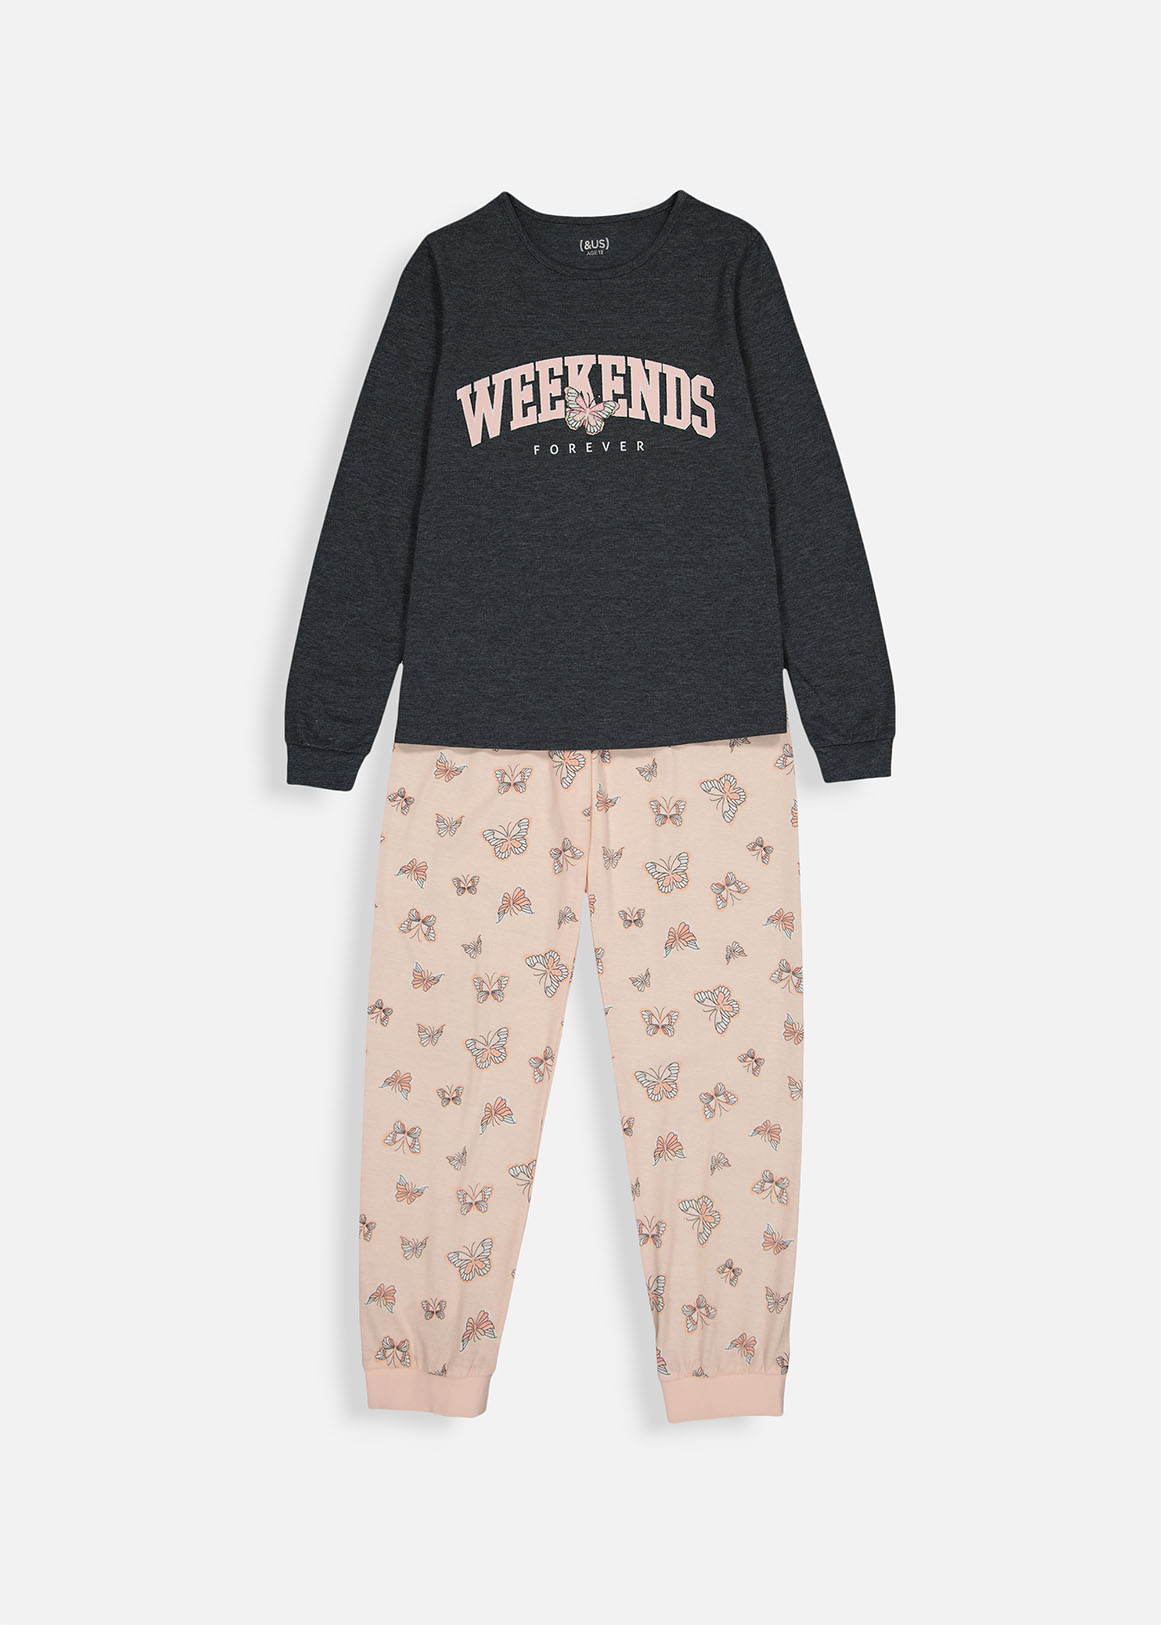 Weekends Forever Pyjamas | Woolworths.co.za